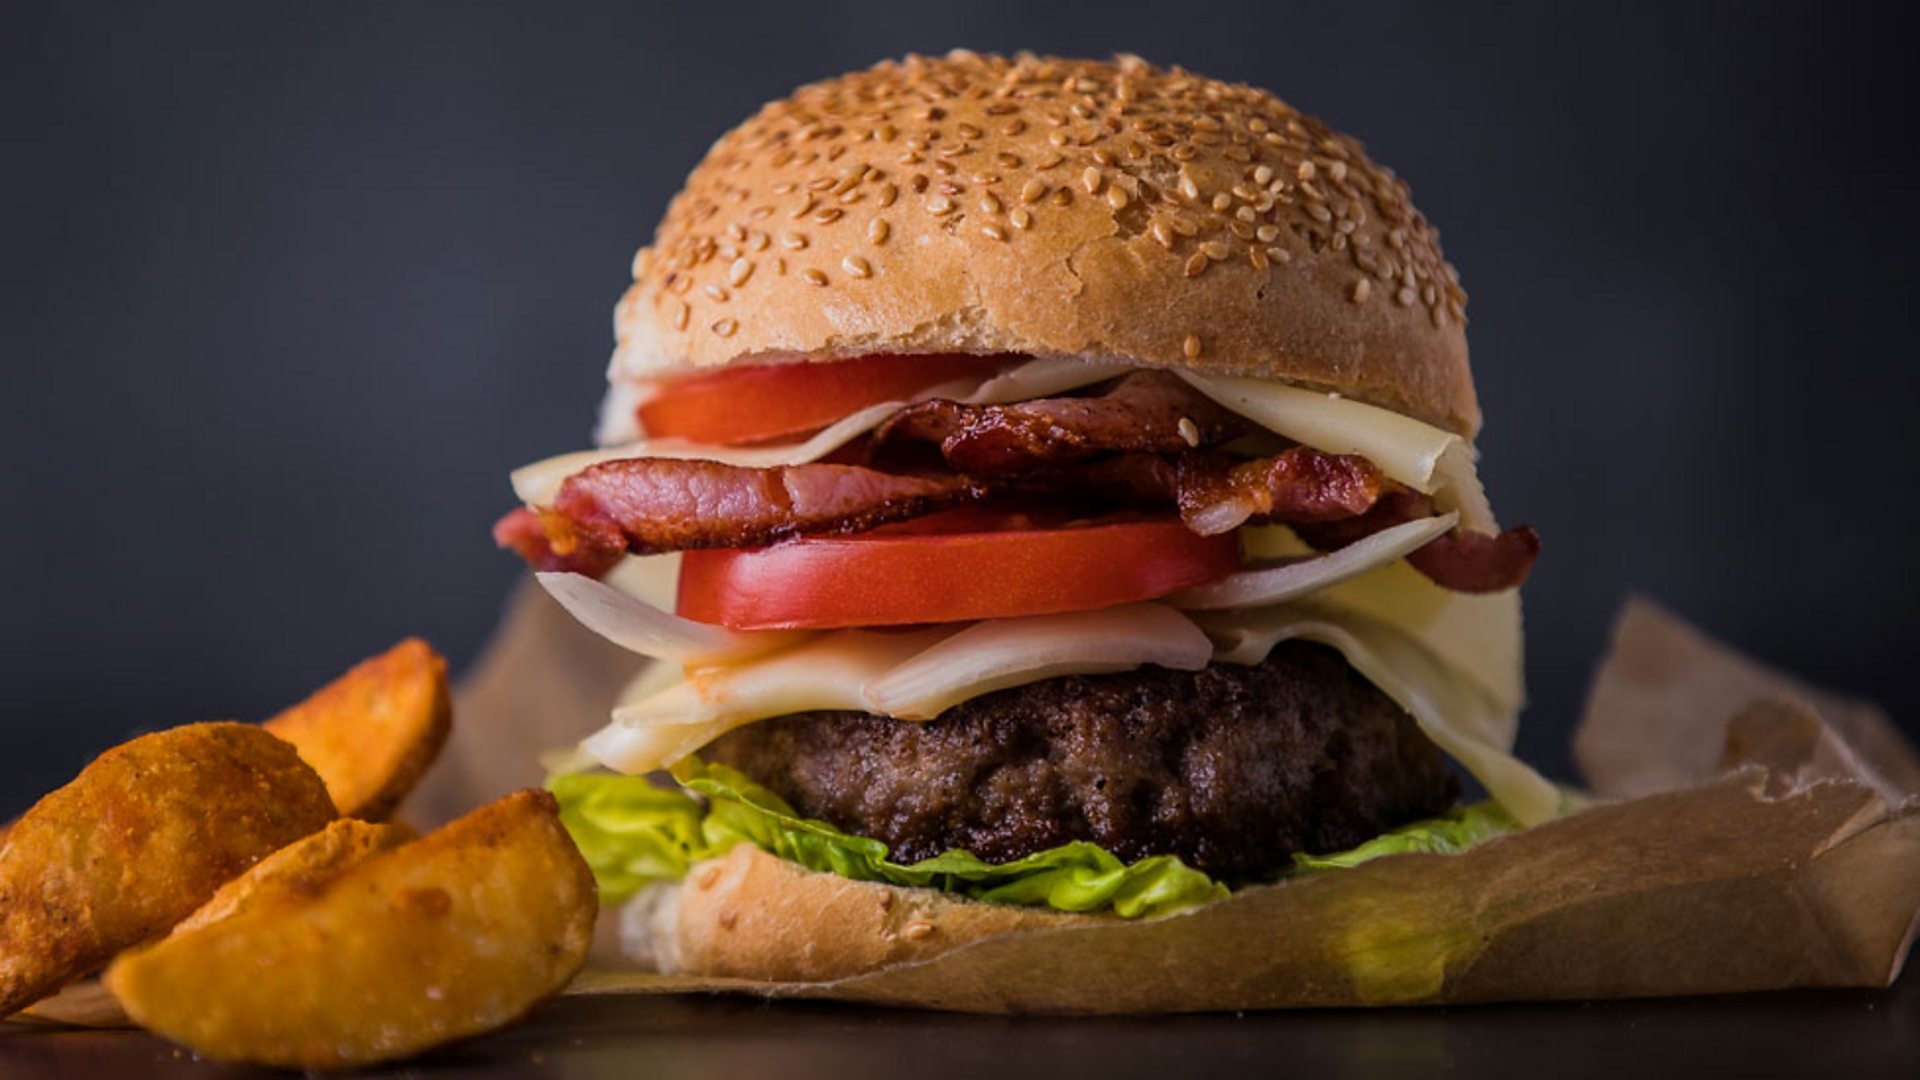 Hamburger: Toppings can include bacon, avocado or guacamole. 1920x1080 Full HD Wallpaper.